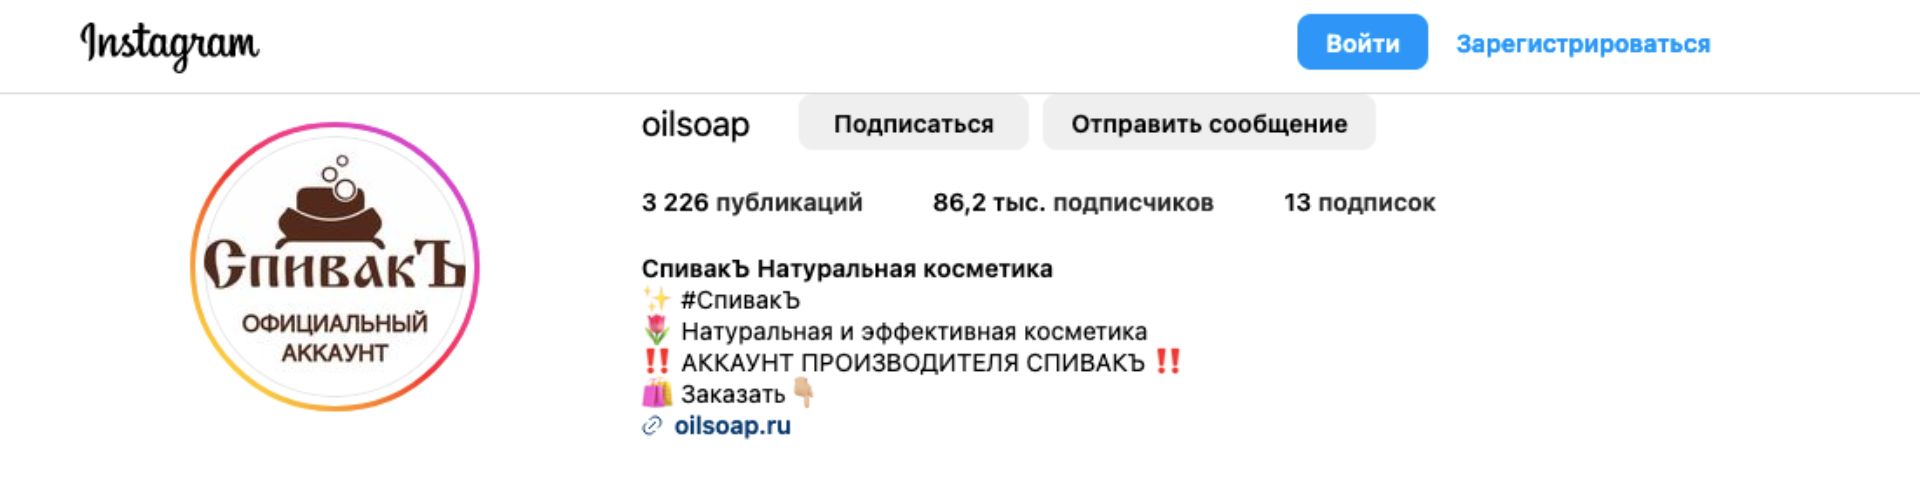 Скидка 15% за подписку на Instagram СпивакЪ